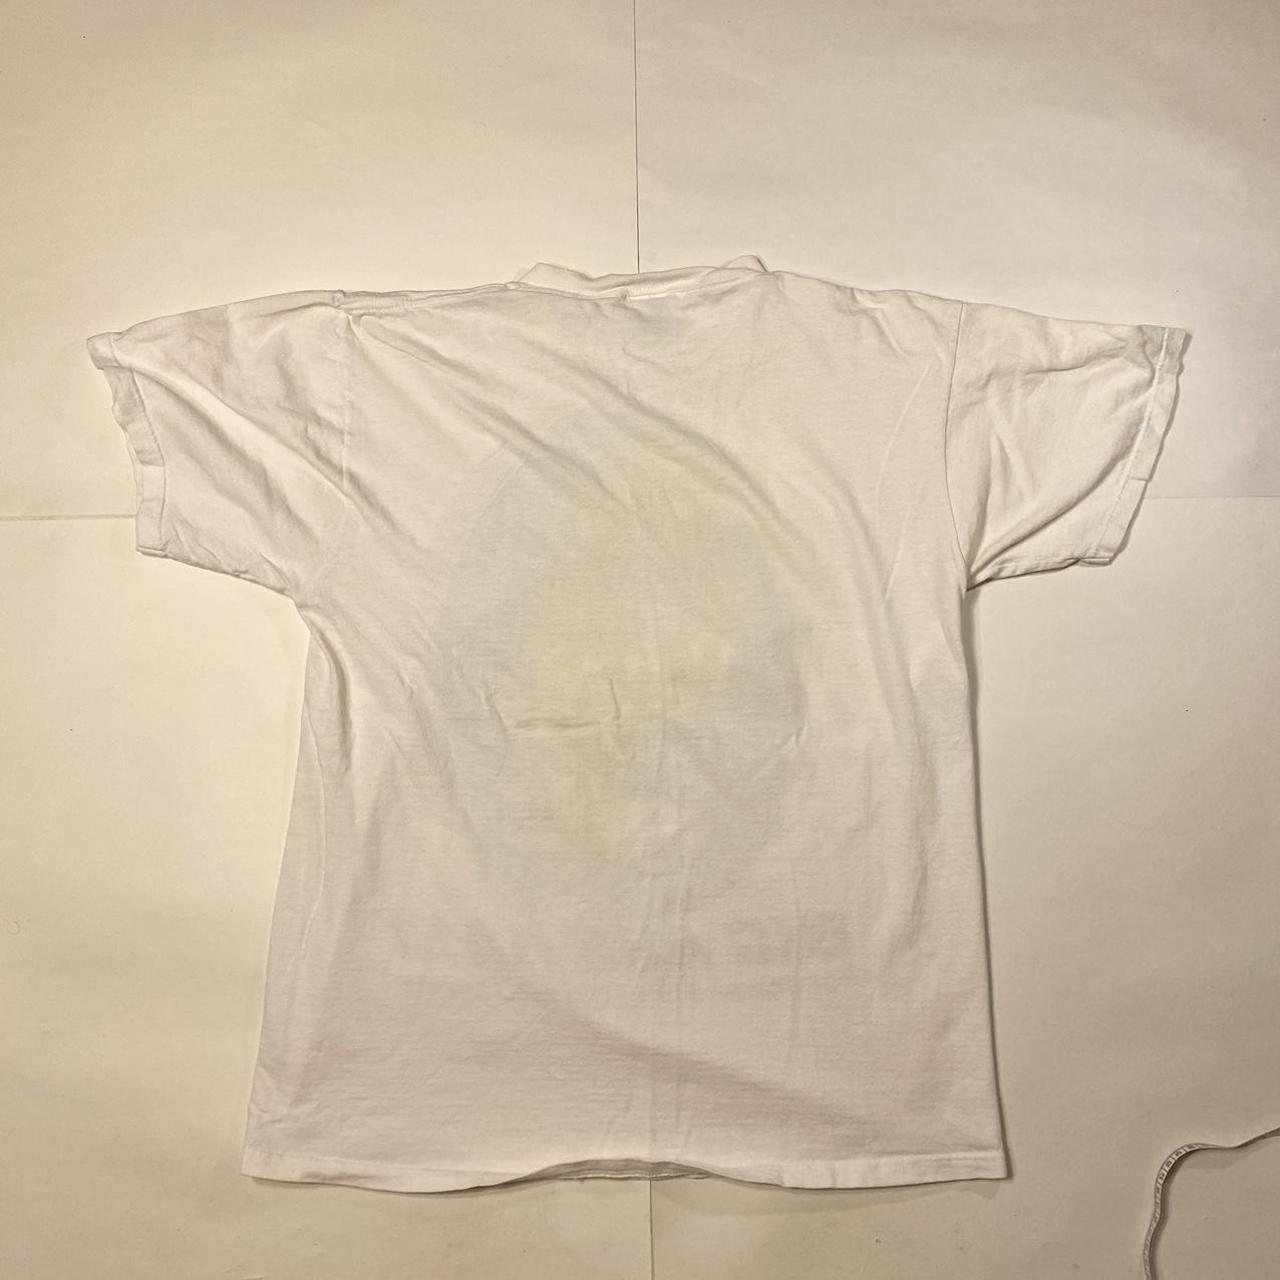 Tultex Men's White and Cream T-shirt | Depop